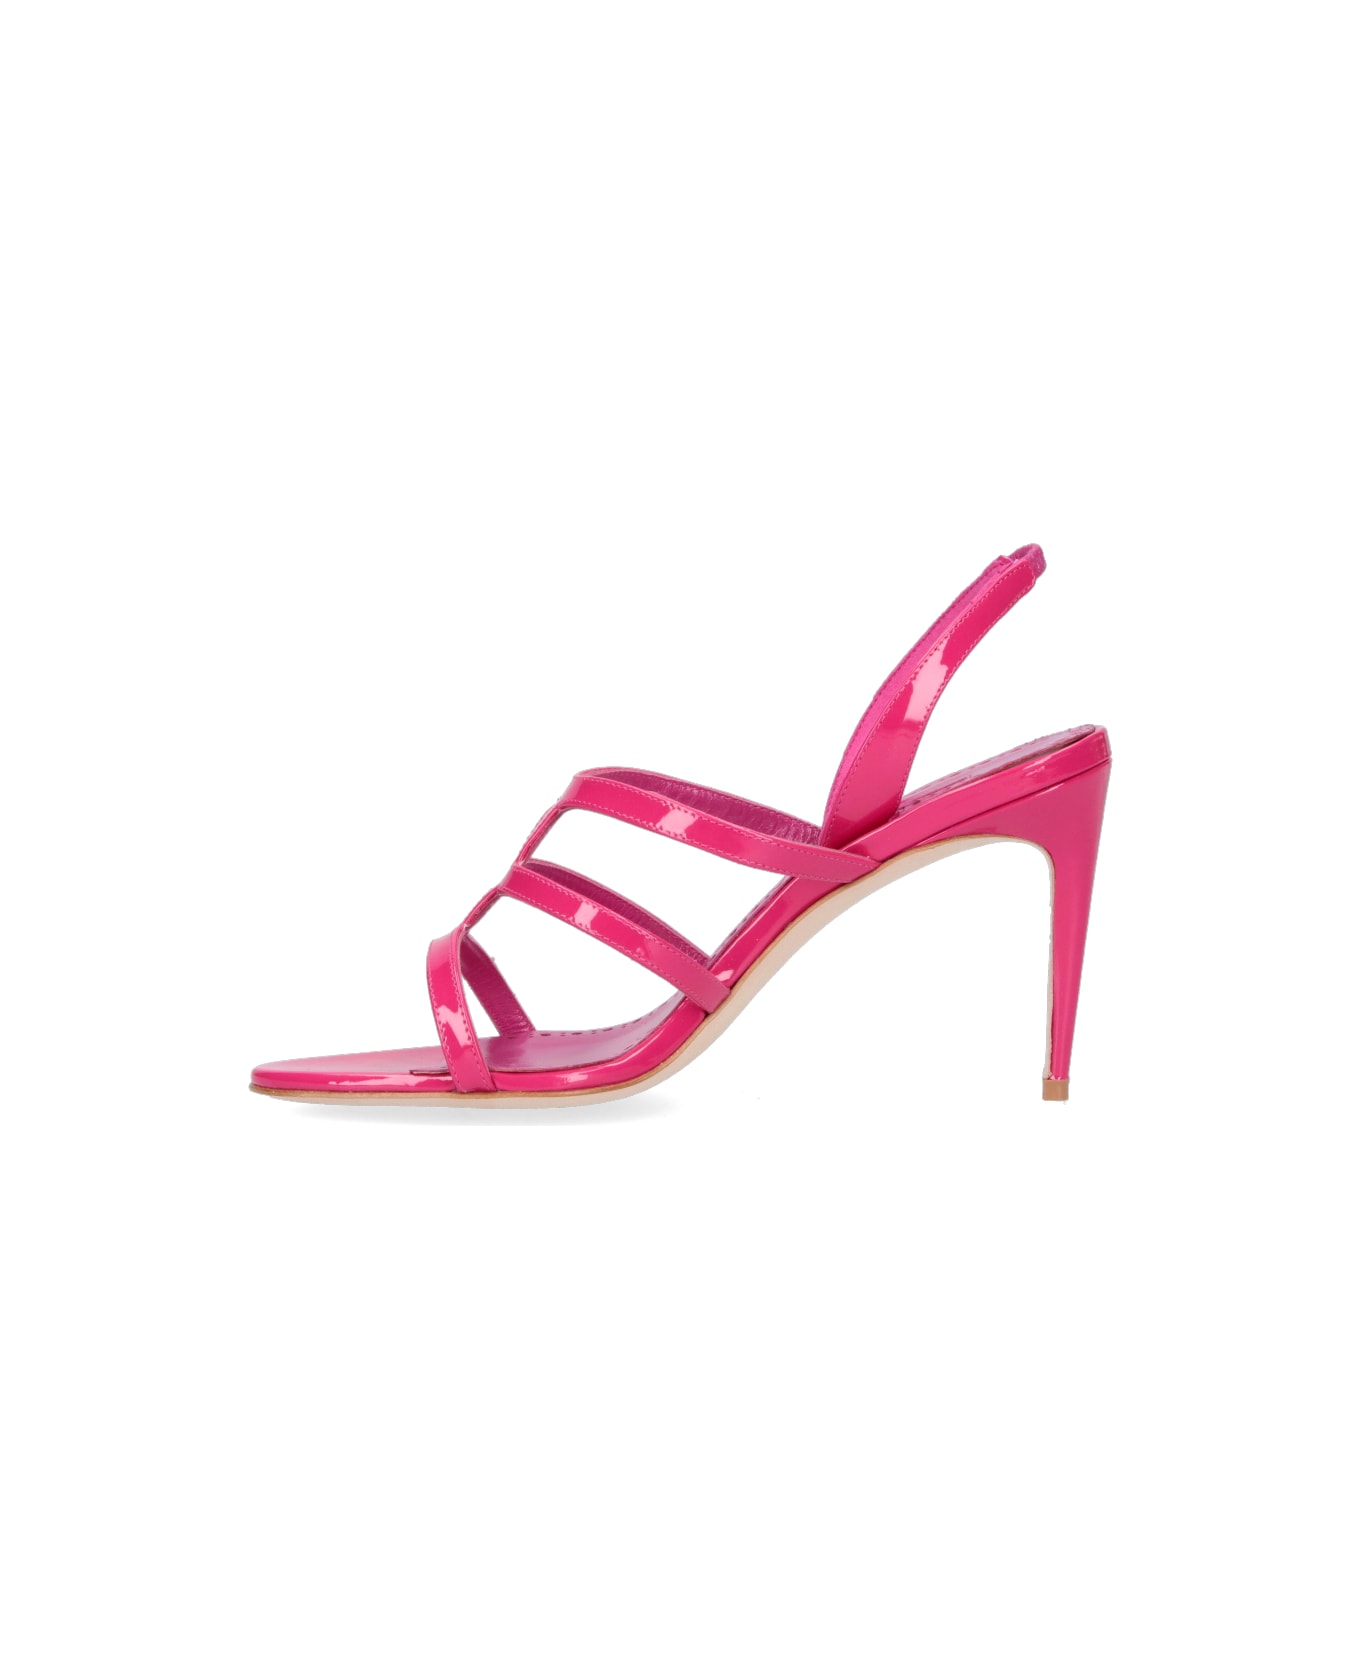 Manolo Blahnik Sandals "artysa" - Pink サンダル